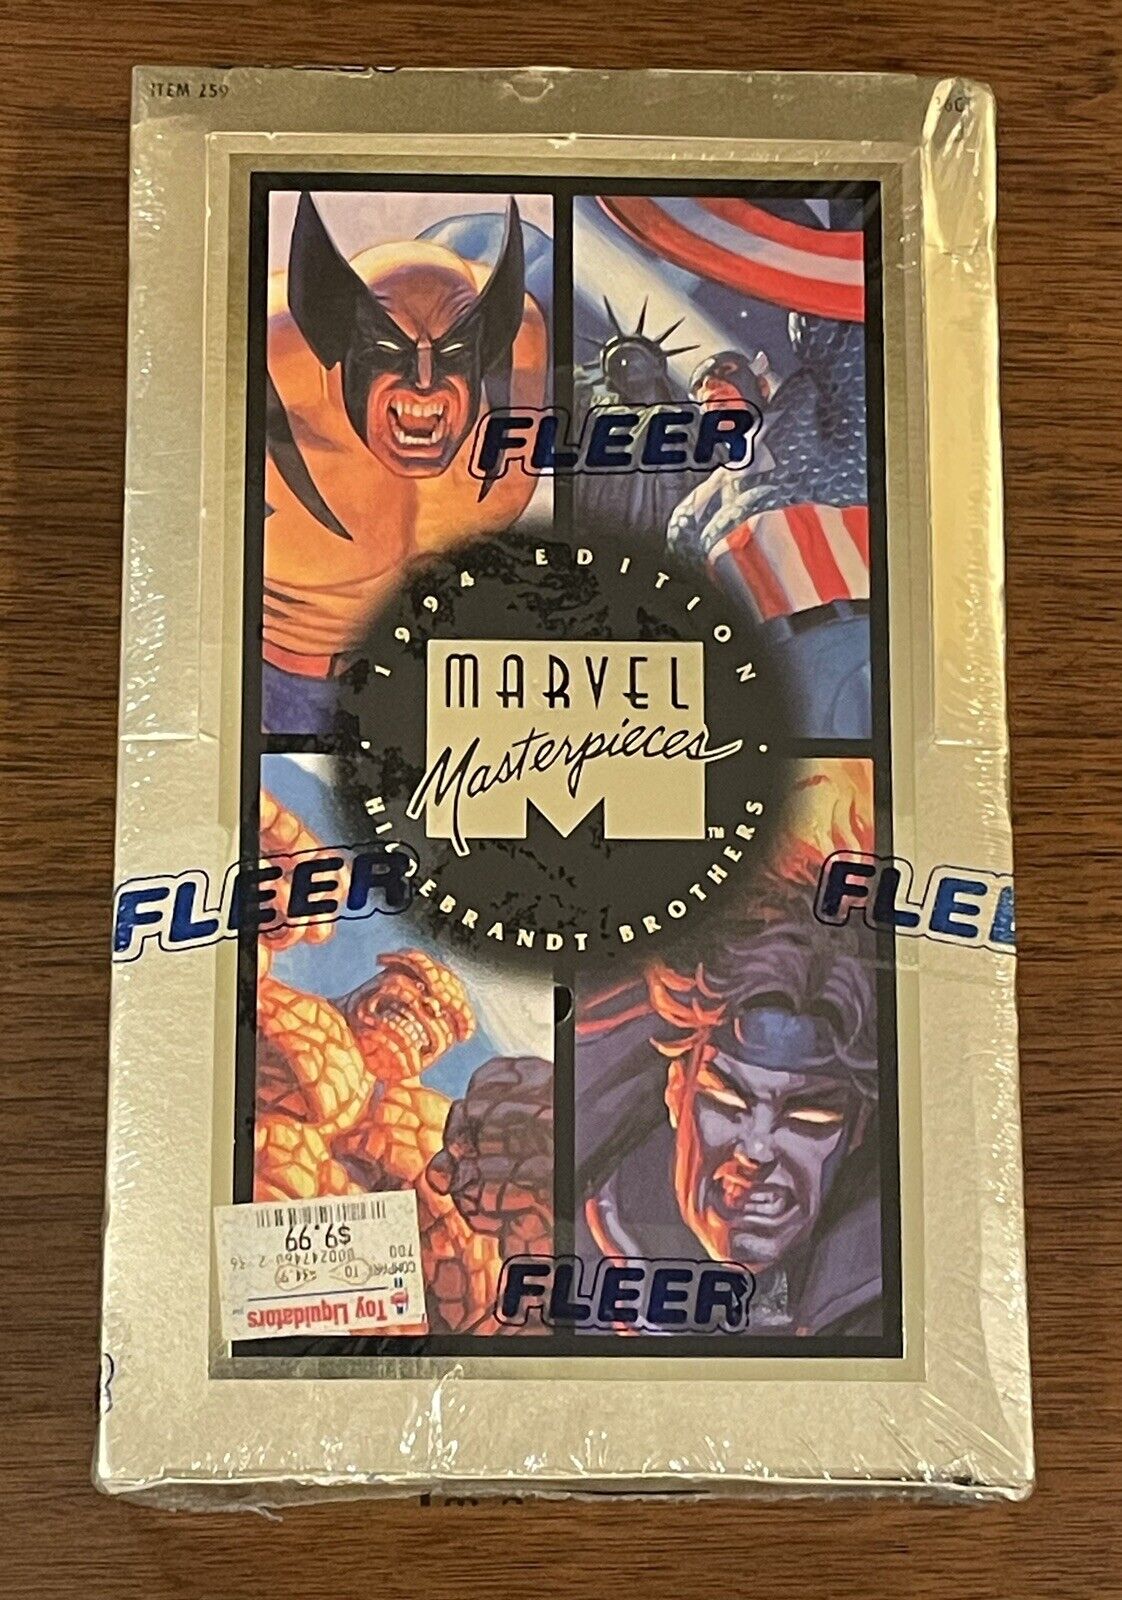 1994 Fleer Marvel Masterpieces Hildebrandt Brothers Factory Sealed Box (36) Pack